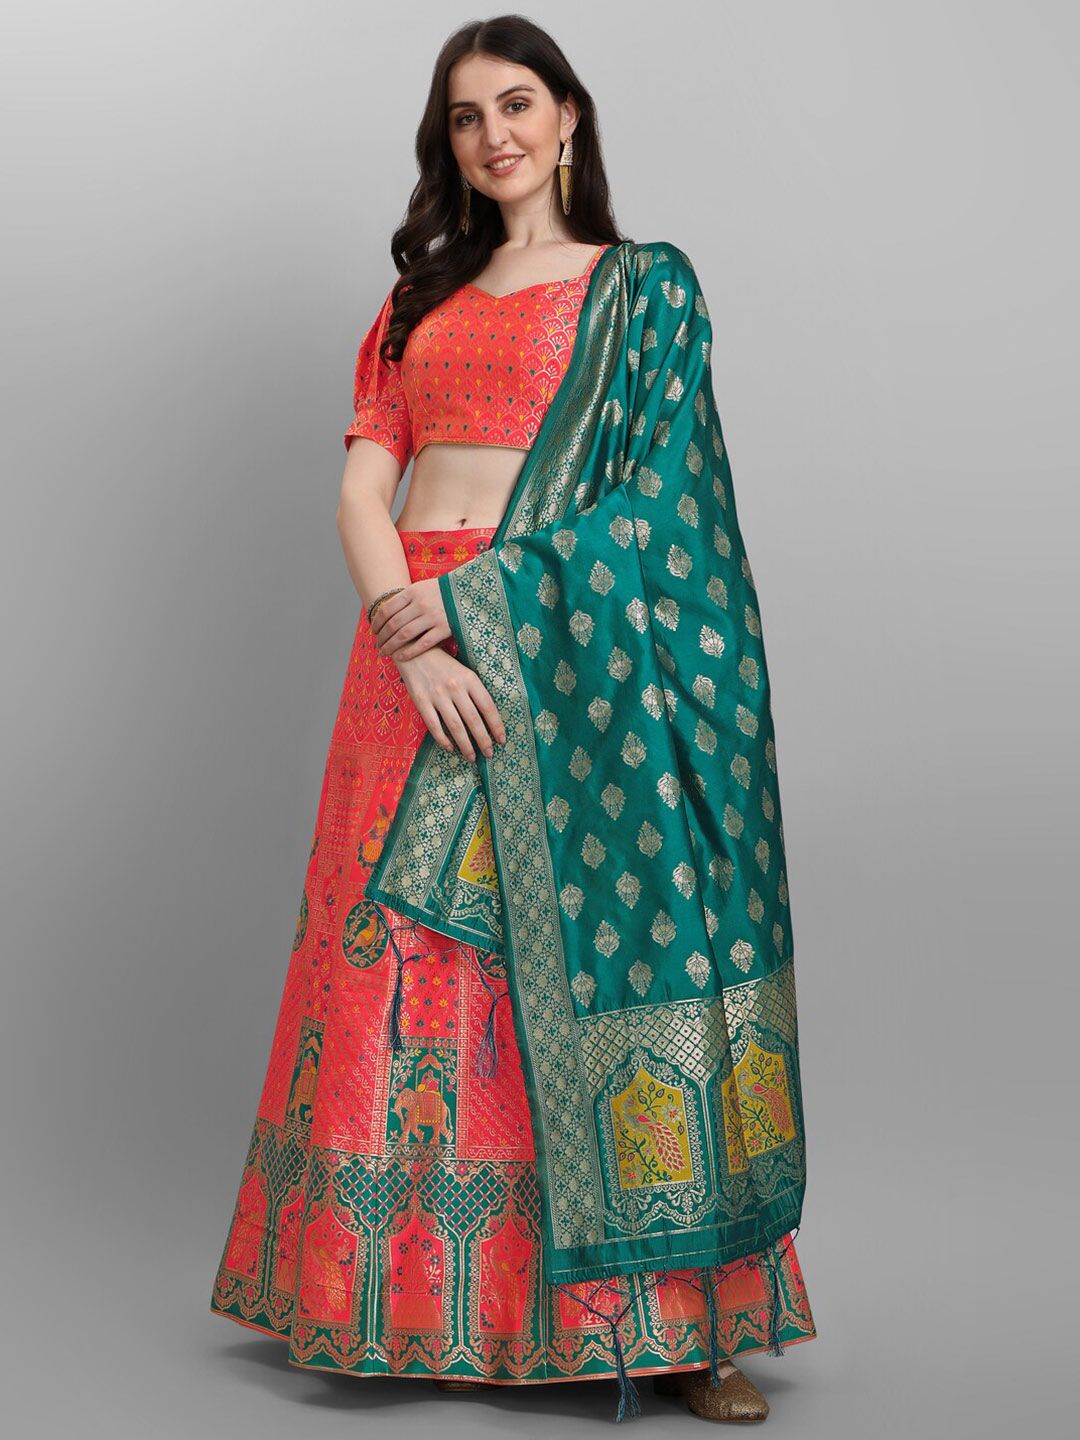 JATRIQQ Women Red & Green Woven Design Semi-Stitched Lehenga Choli Price in India